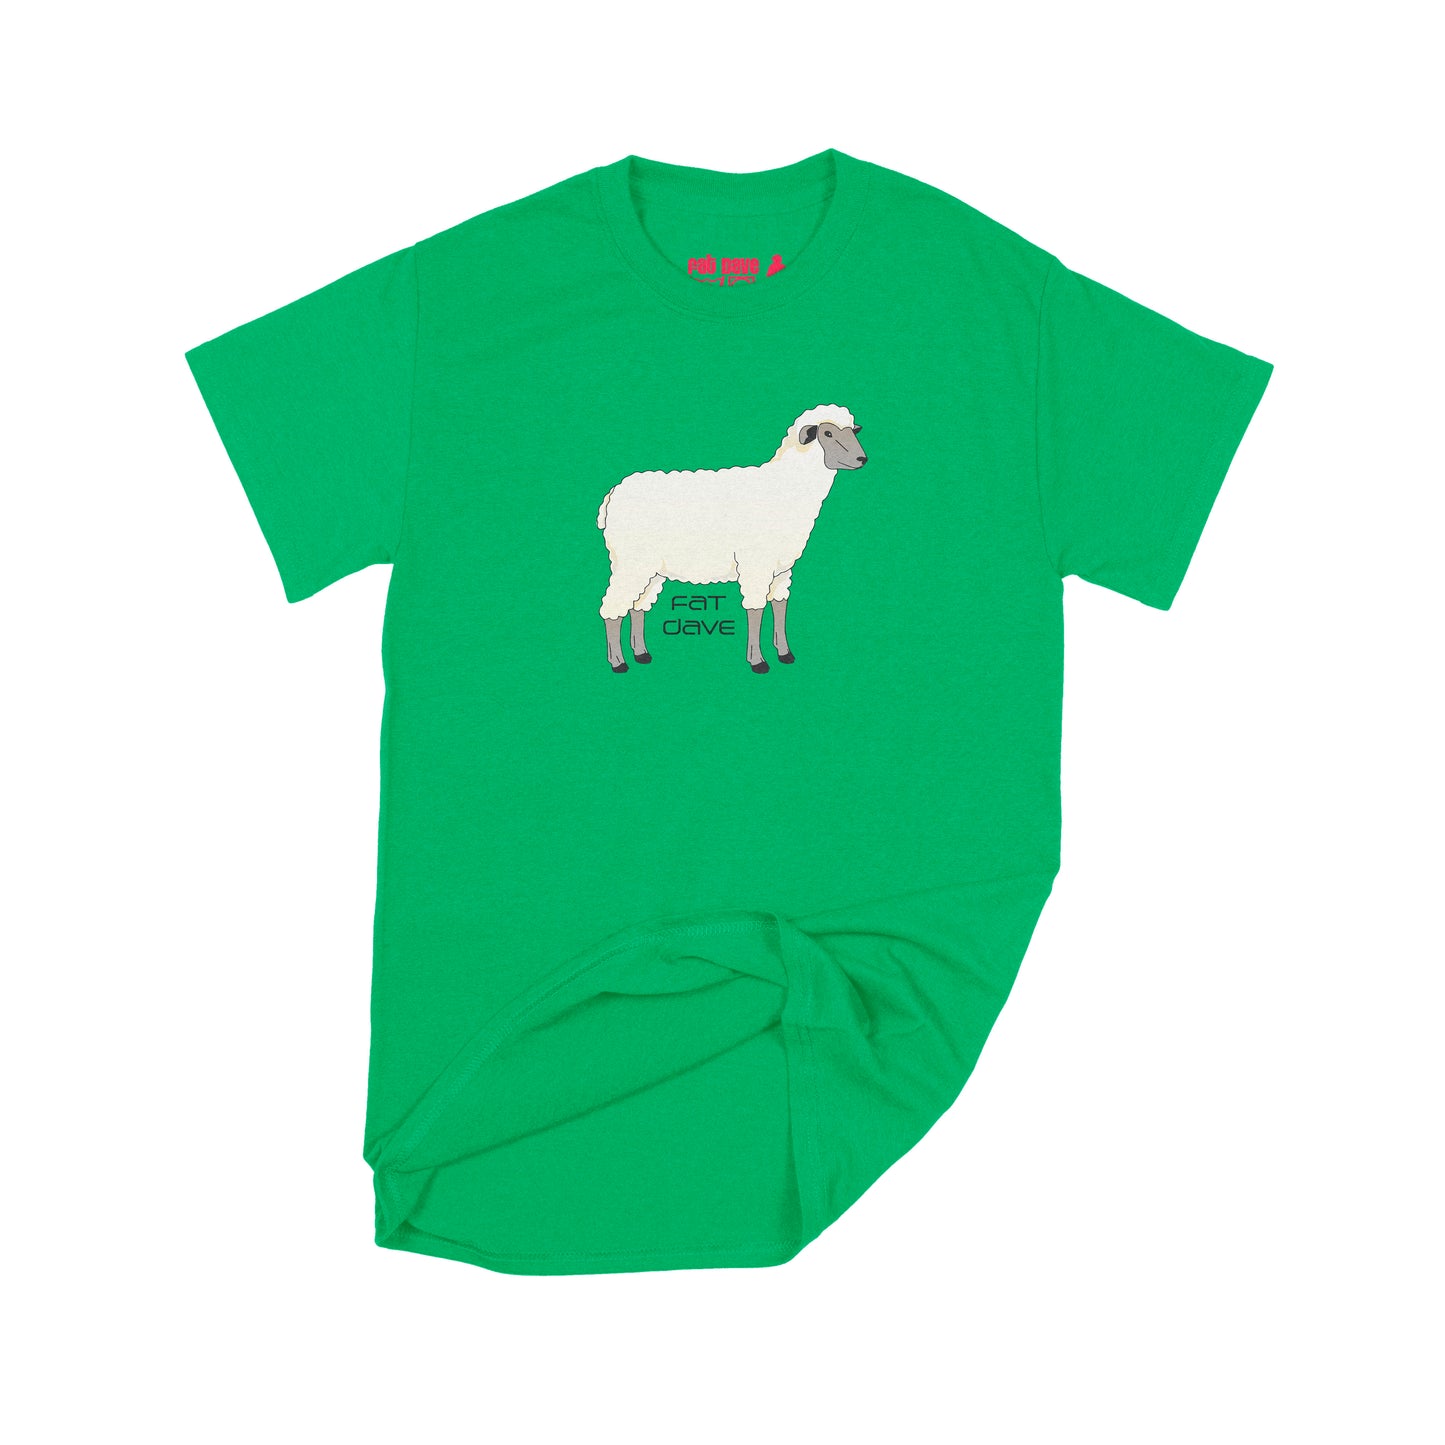 Brantford, Business, Fat Dave, Sheep, T-Shirt, Irish Green